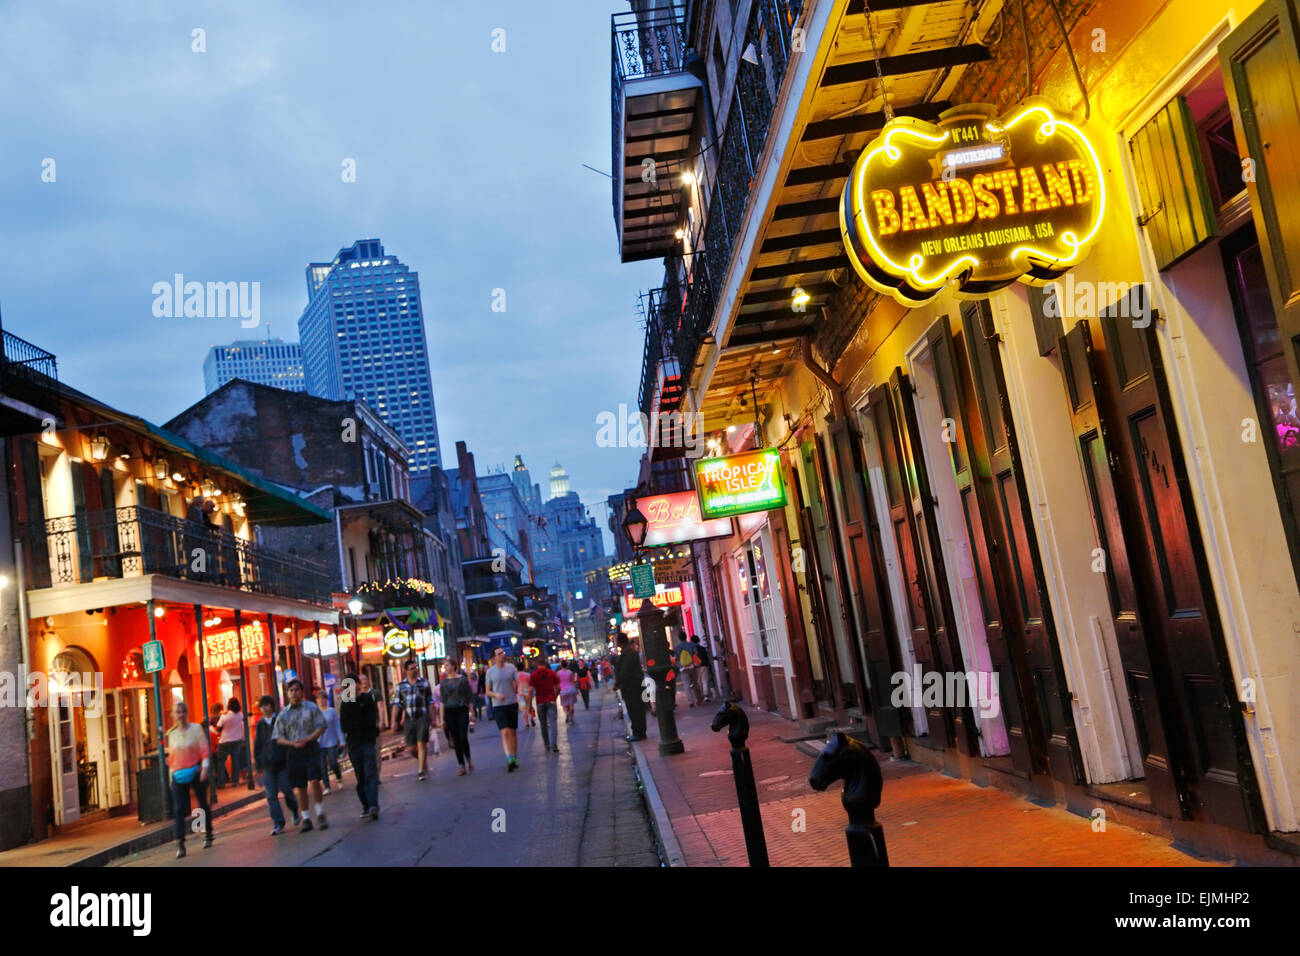 New Orleans, Bourbon street. Stock Photo